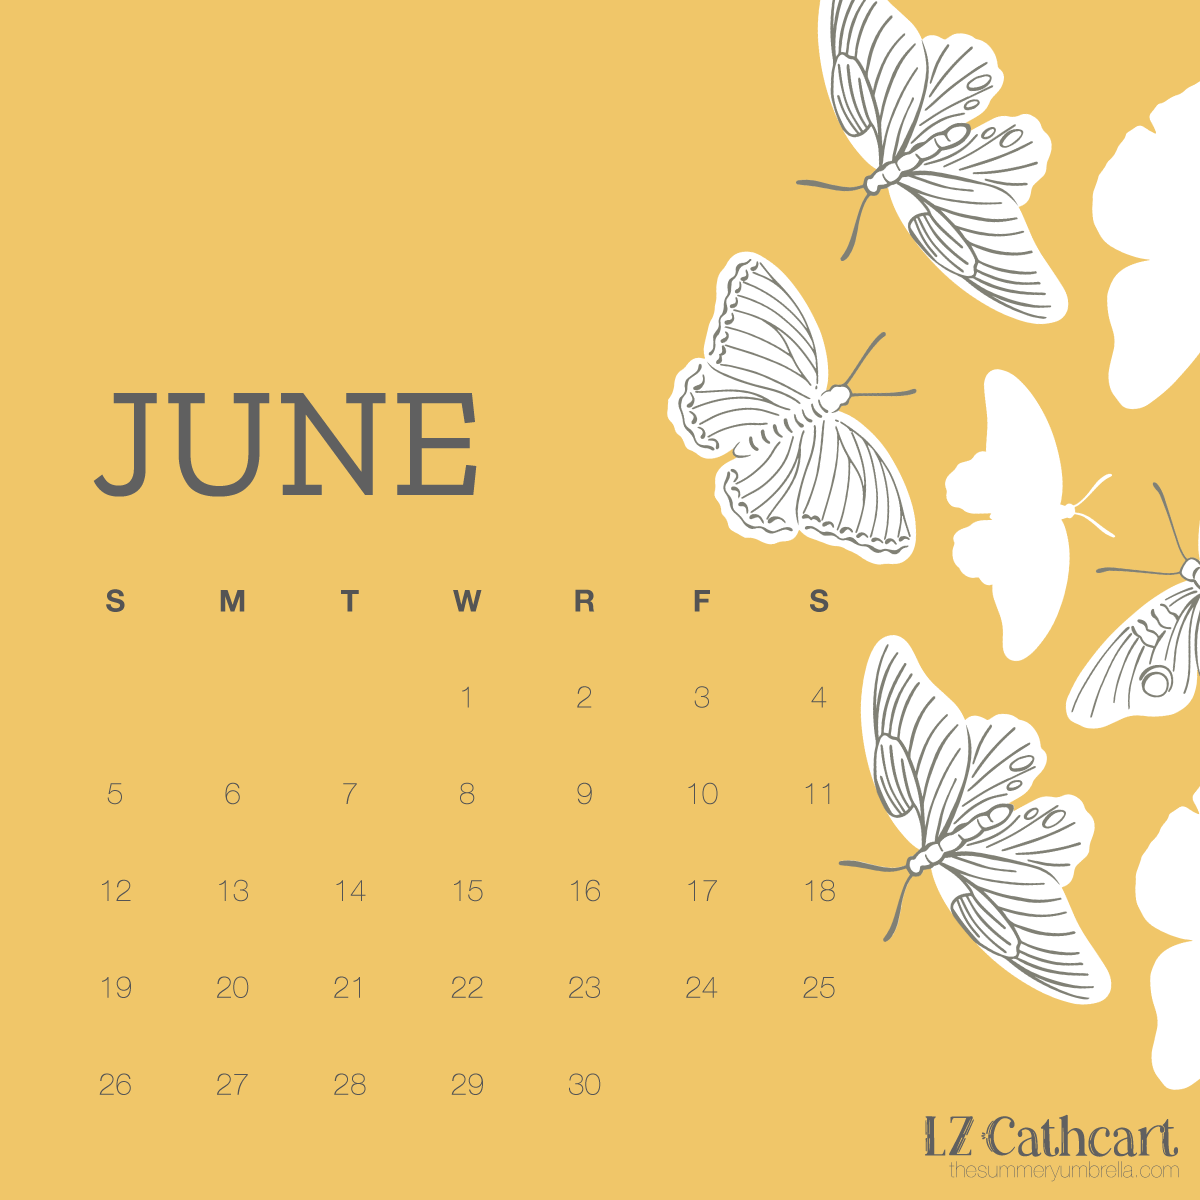 FREE June Calendar Download: Desktop and Smartphone Backgrounds